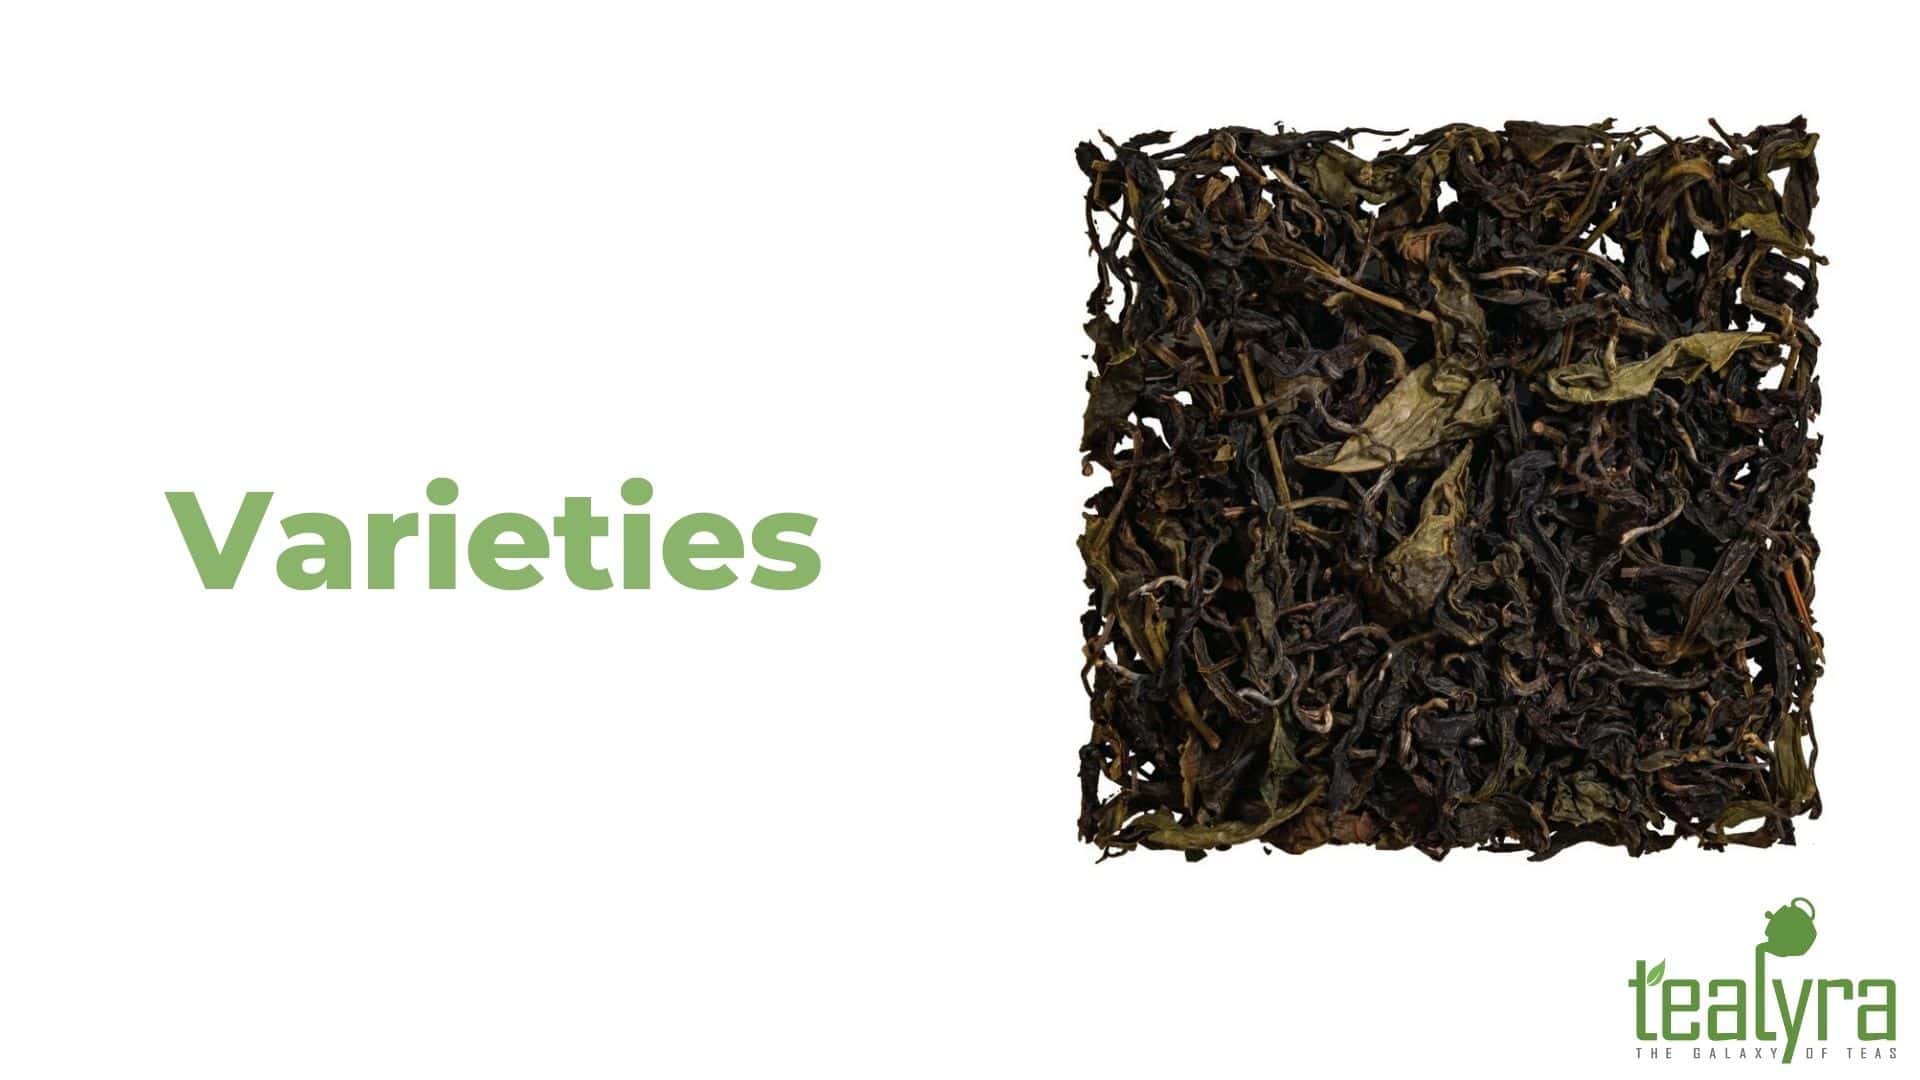 image-Varieties-of-Gaba-Tea